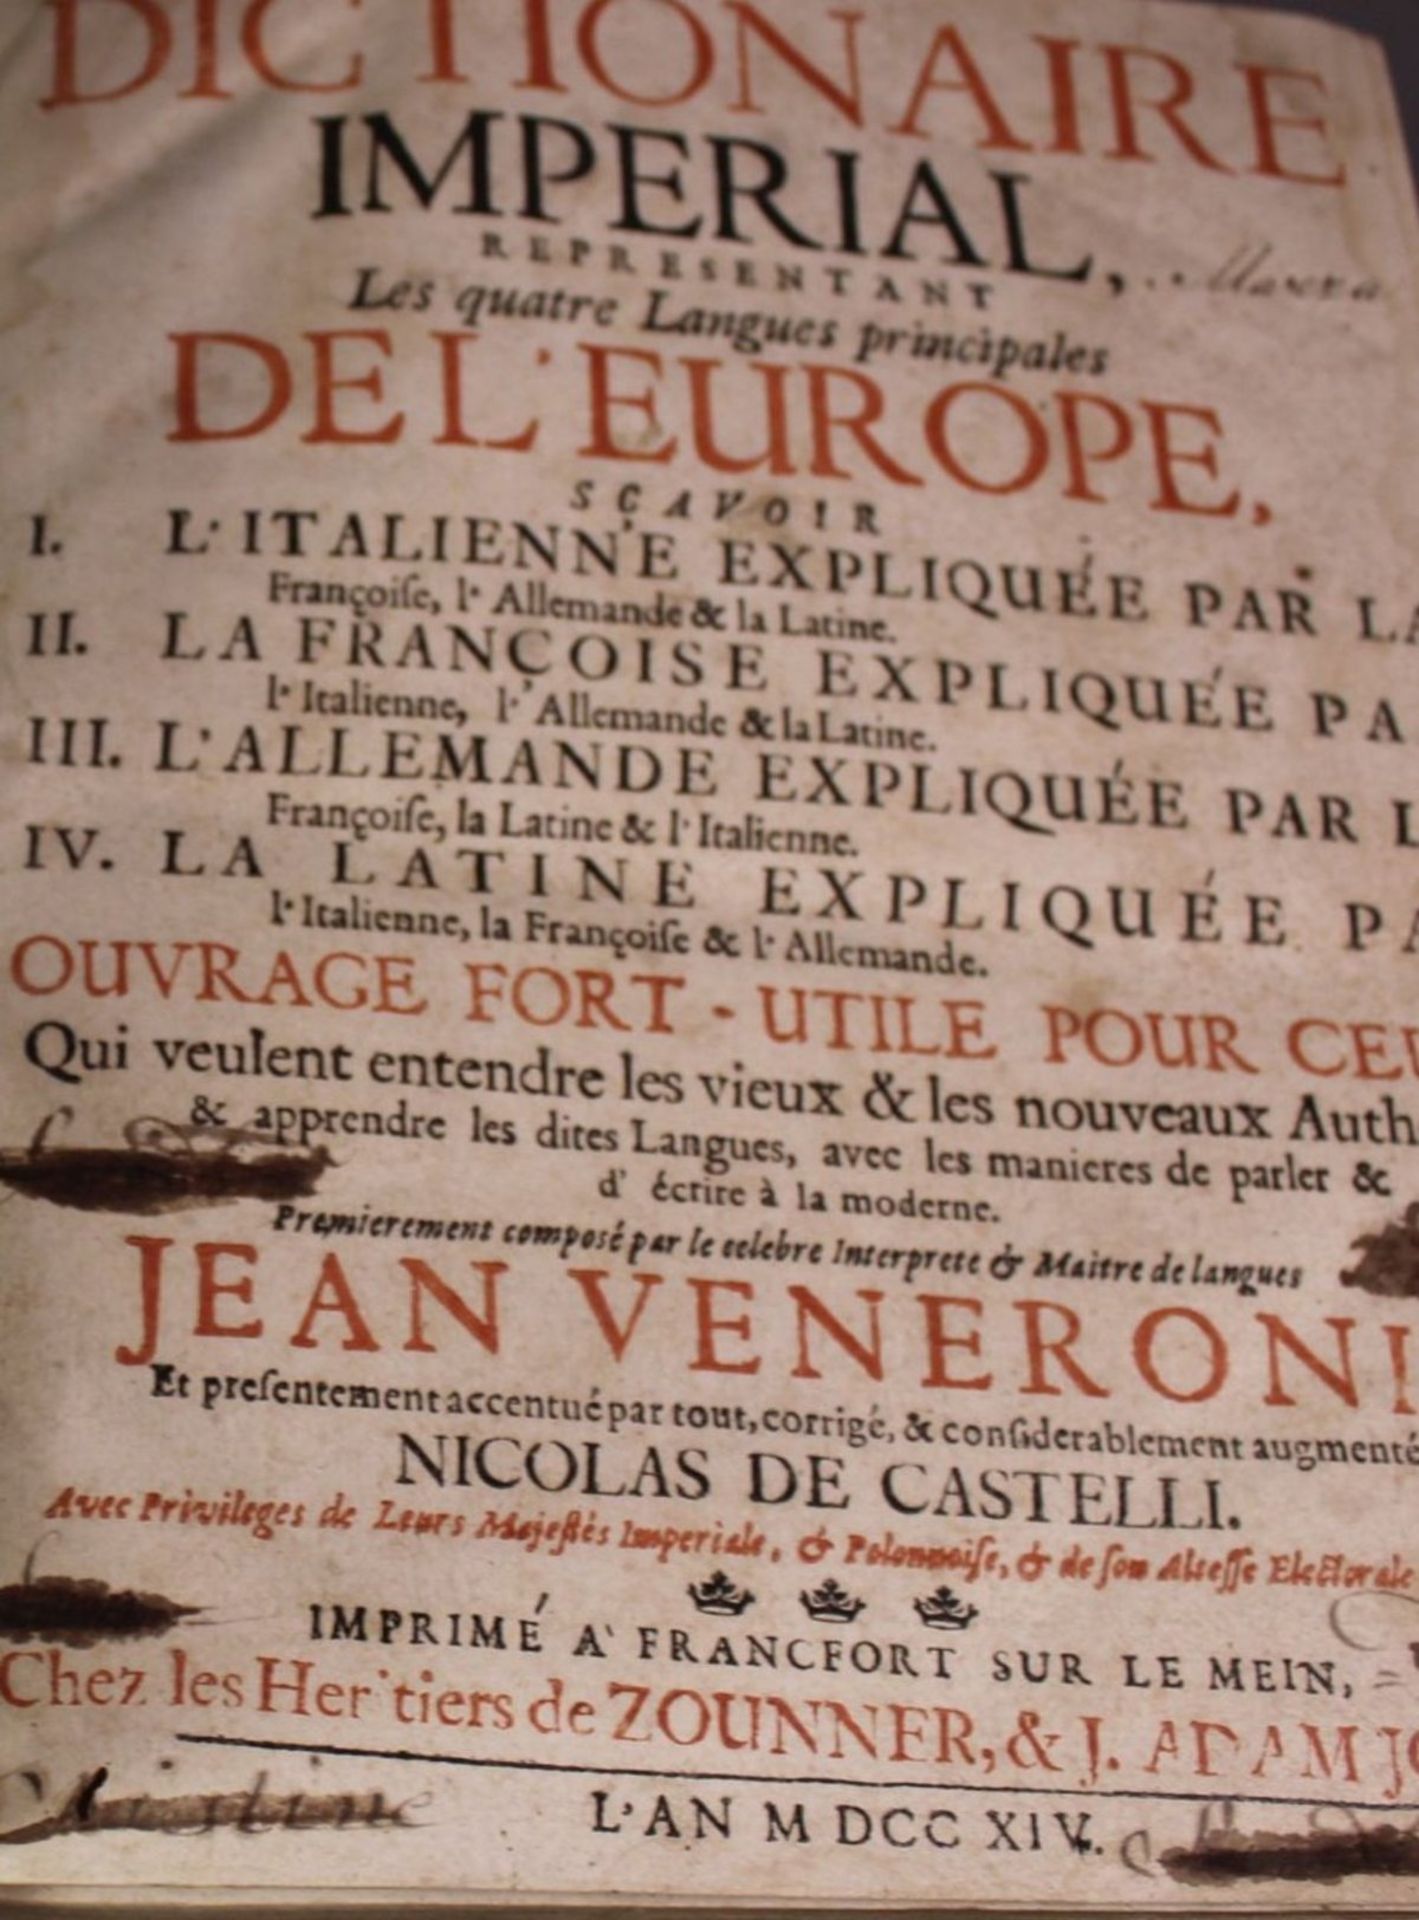 Veneroni, (G. de). Le Dictionaire Impérial representant les quatre Langues principales de l' - Image 4 of 8